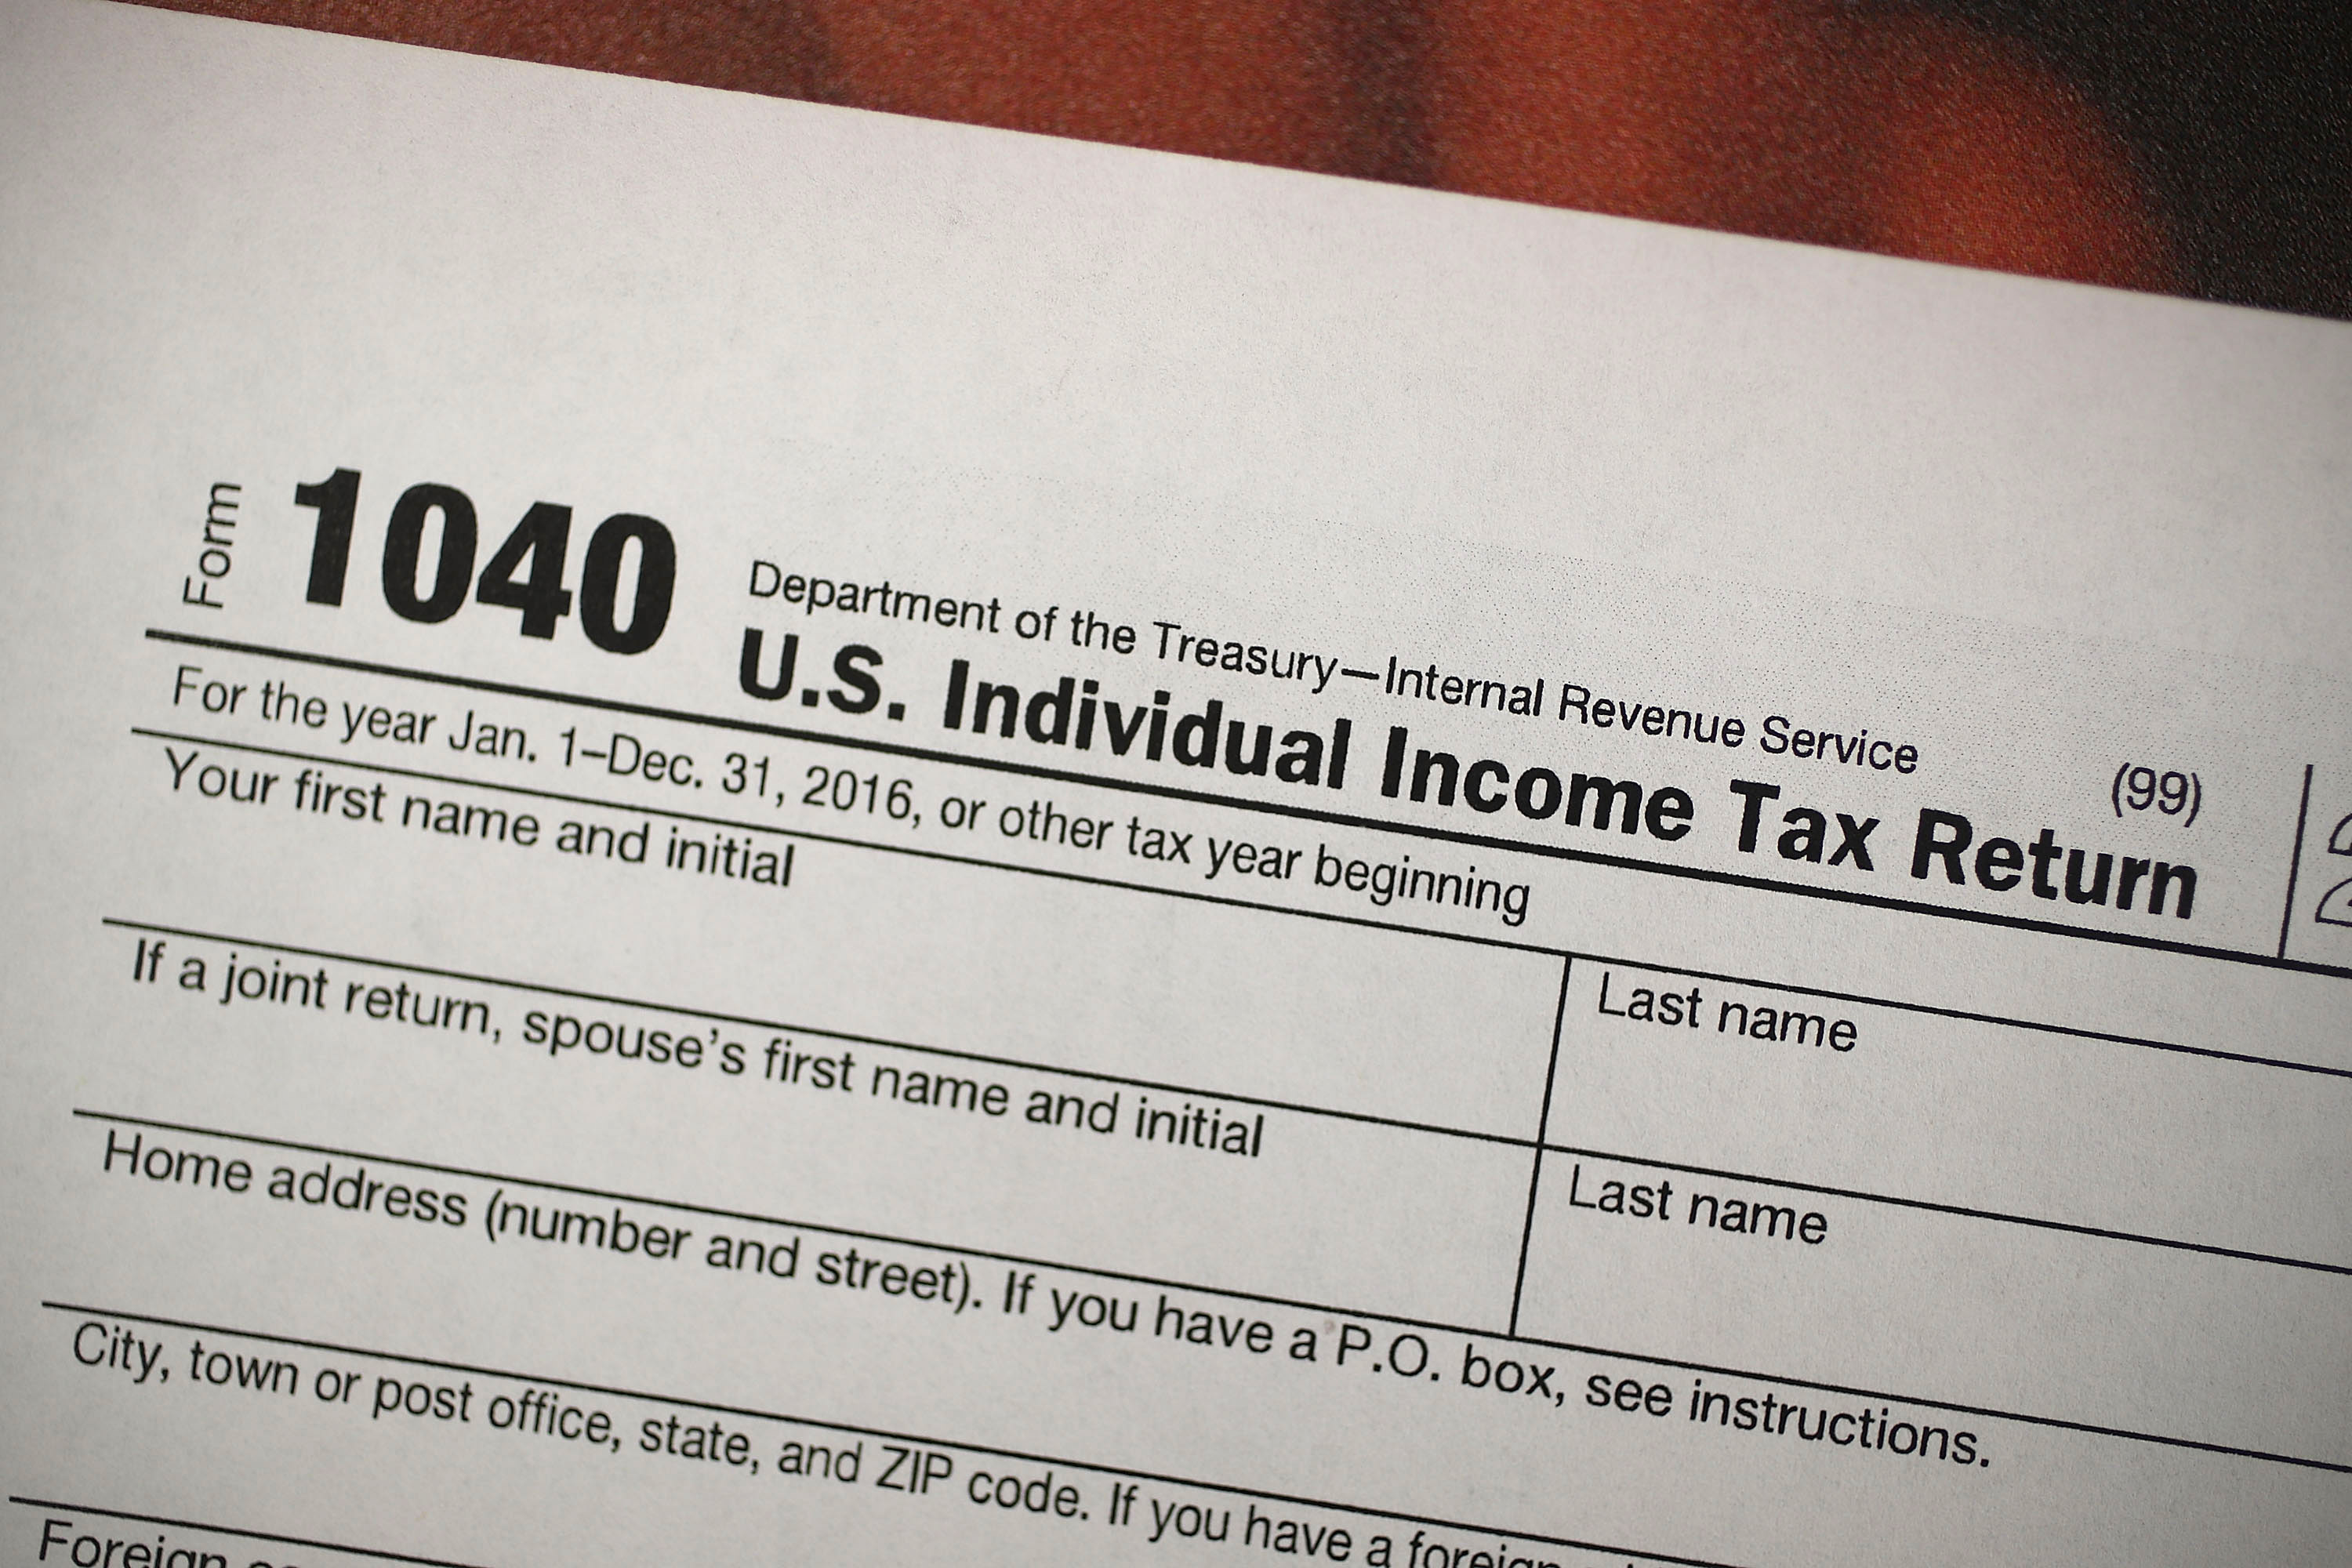 corporate taxfiling deadline 2016 tax extension